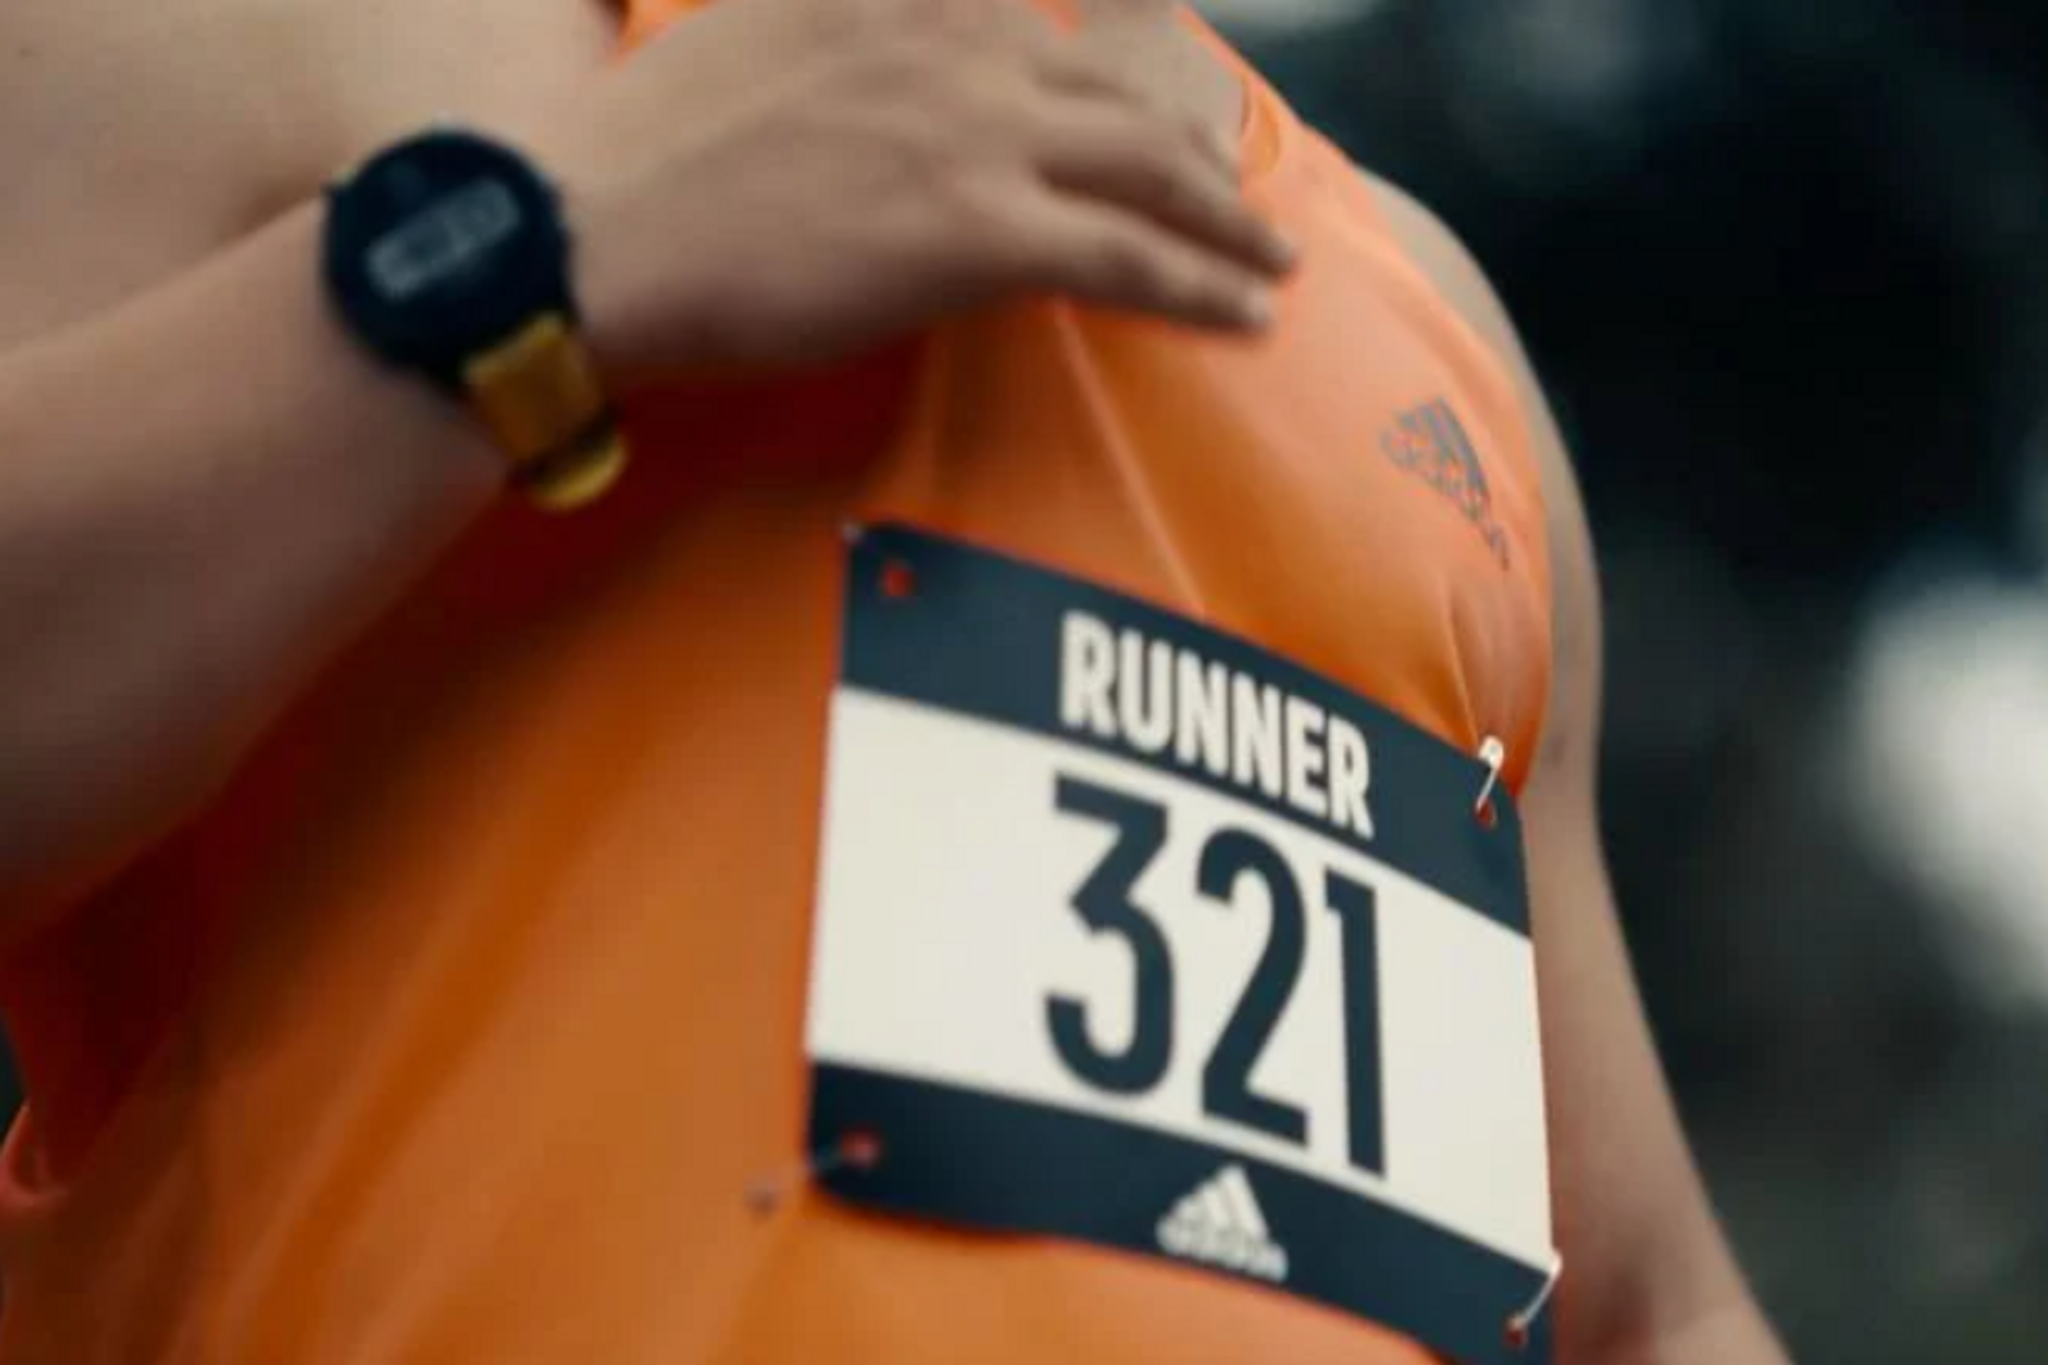 Adidas' Runner 321 ad spotlights Down syndrome athletes